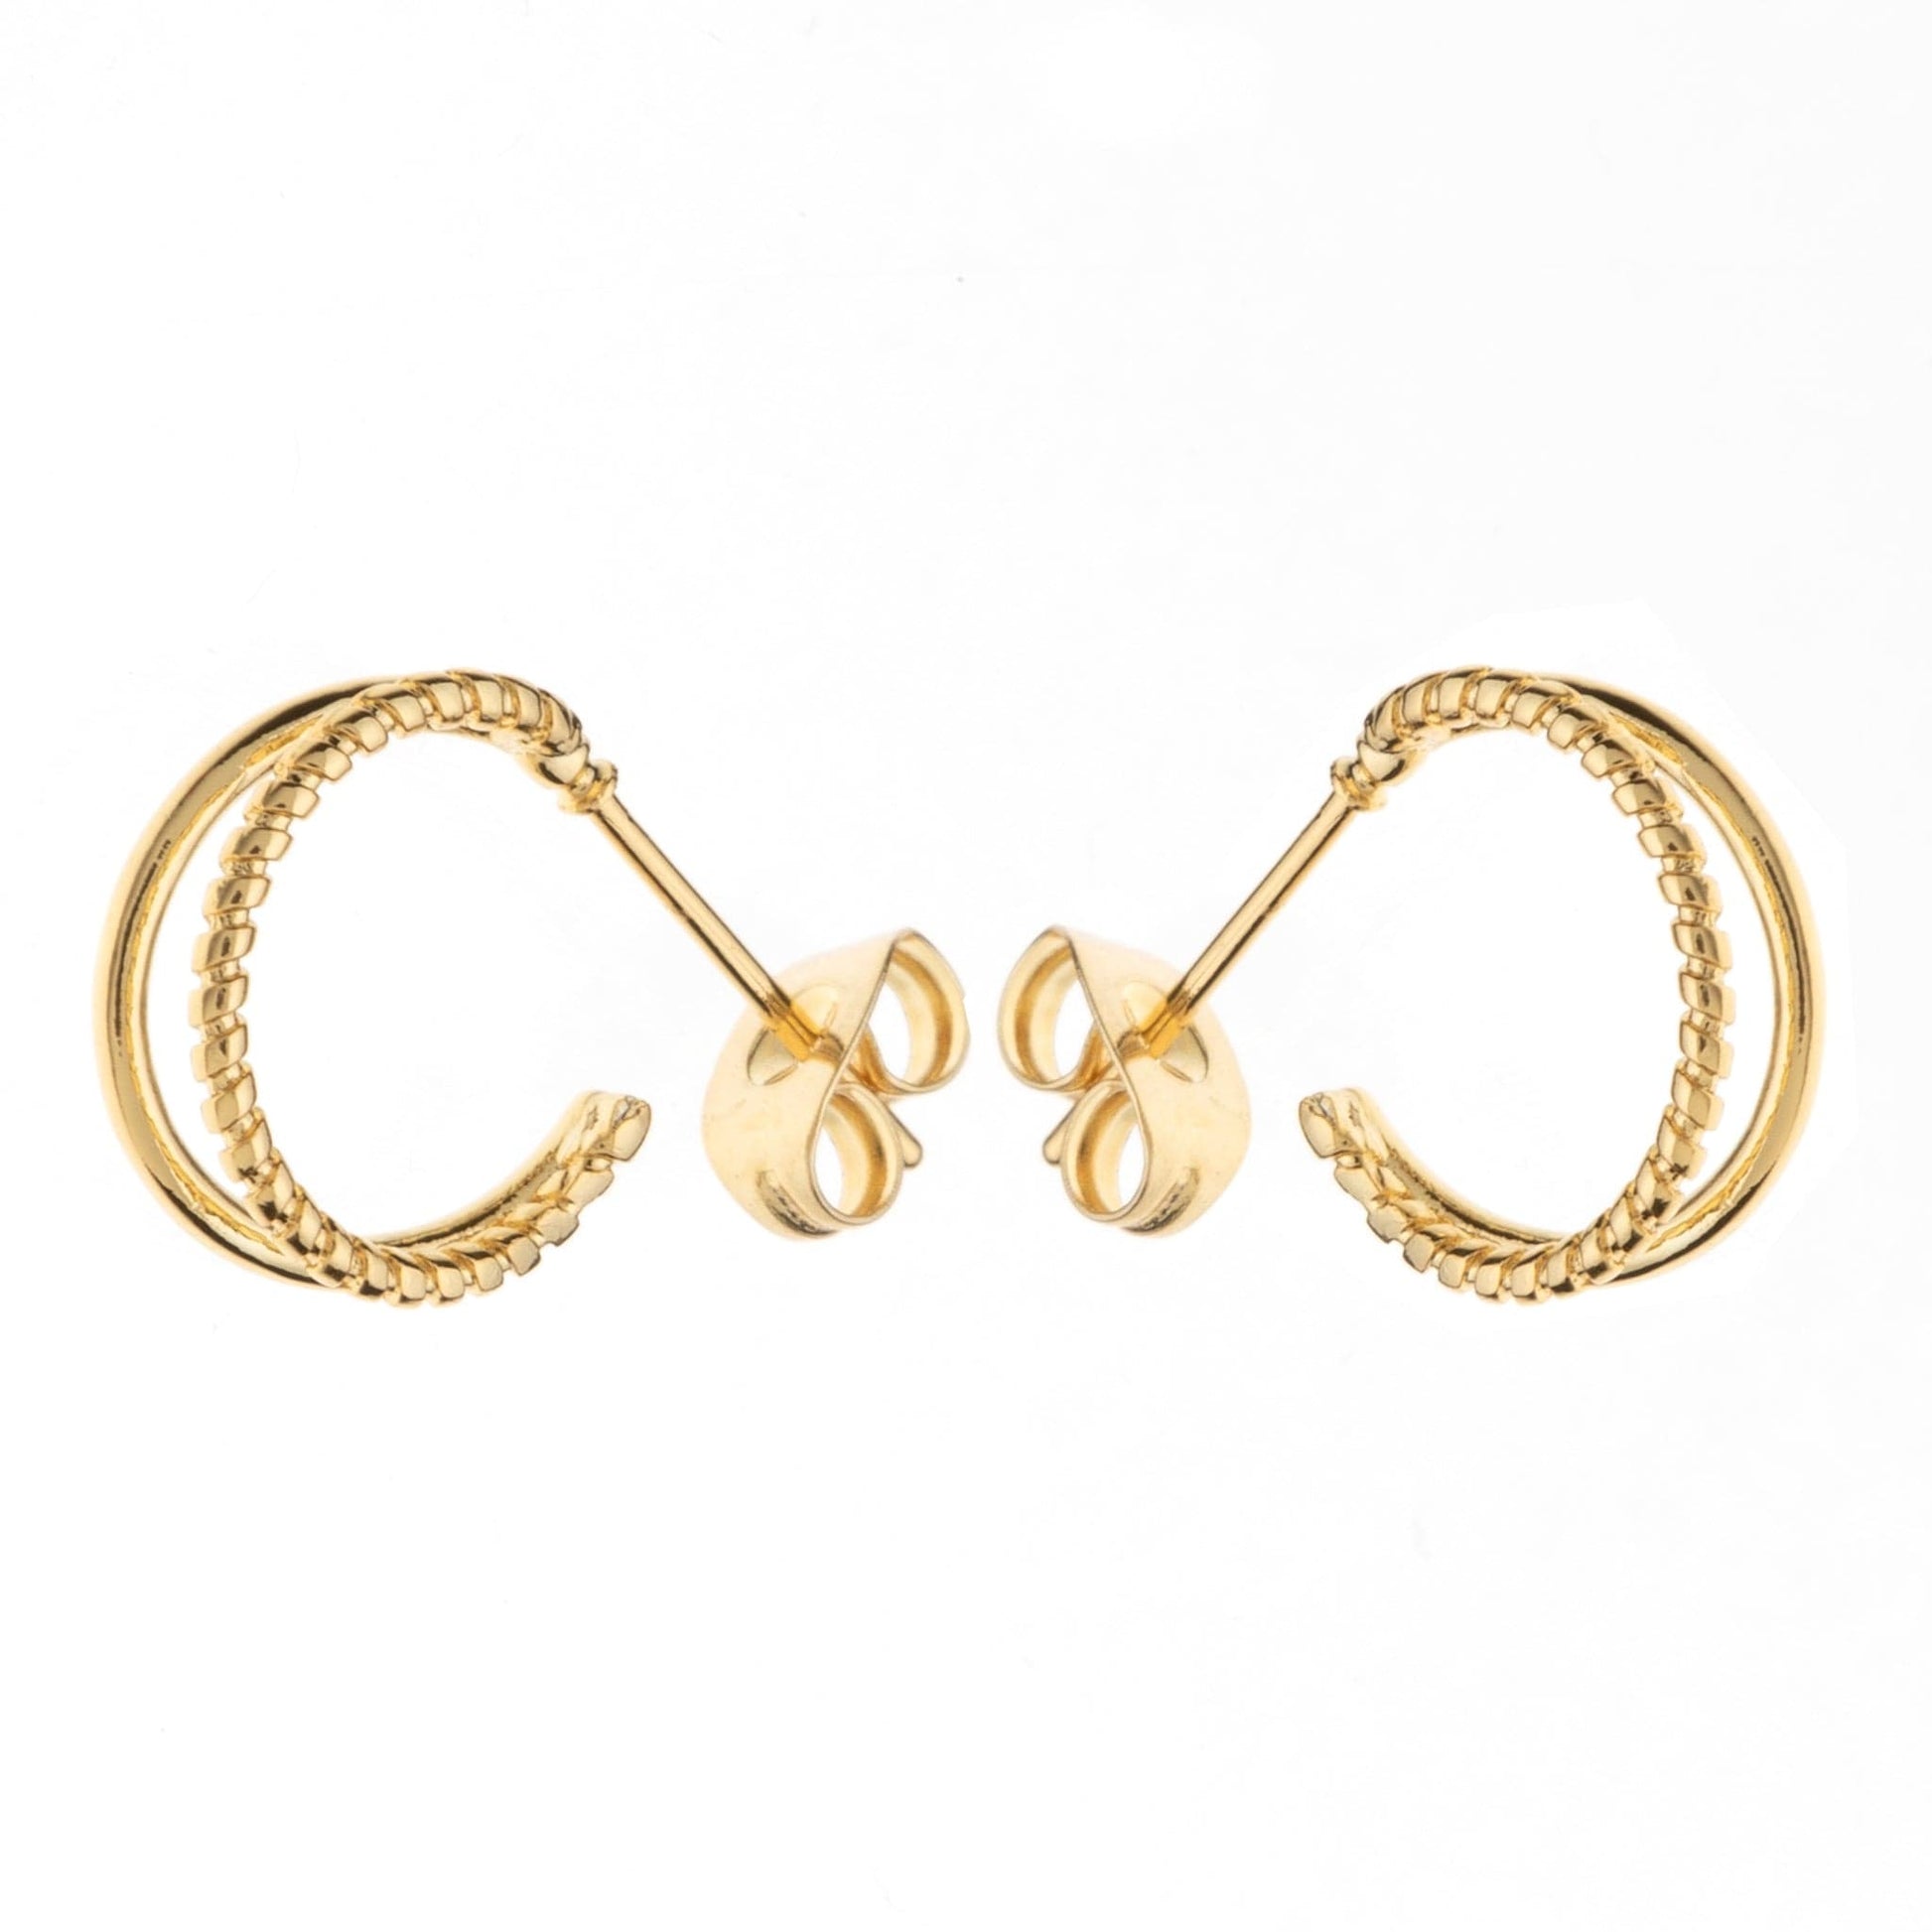 Double bar twisted gold mini hoop earrings